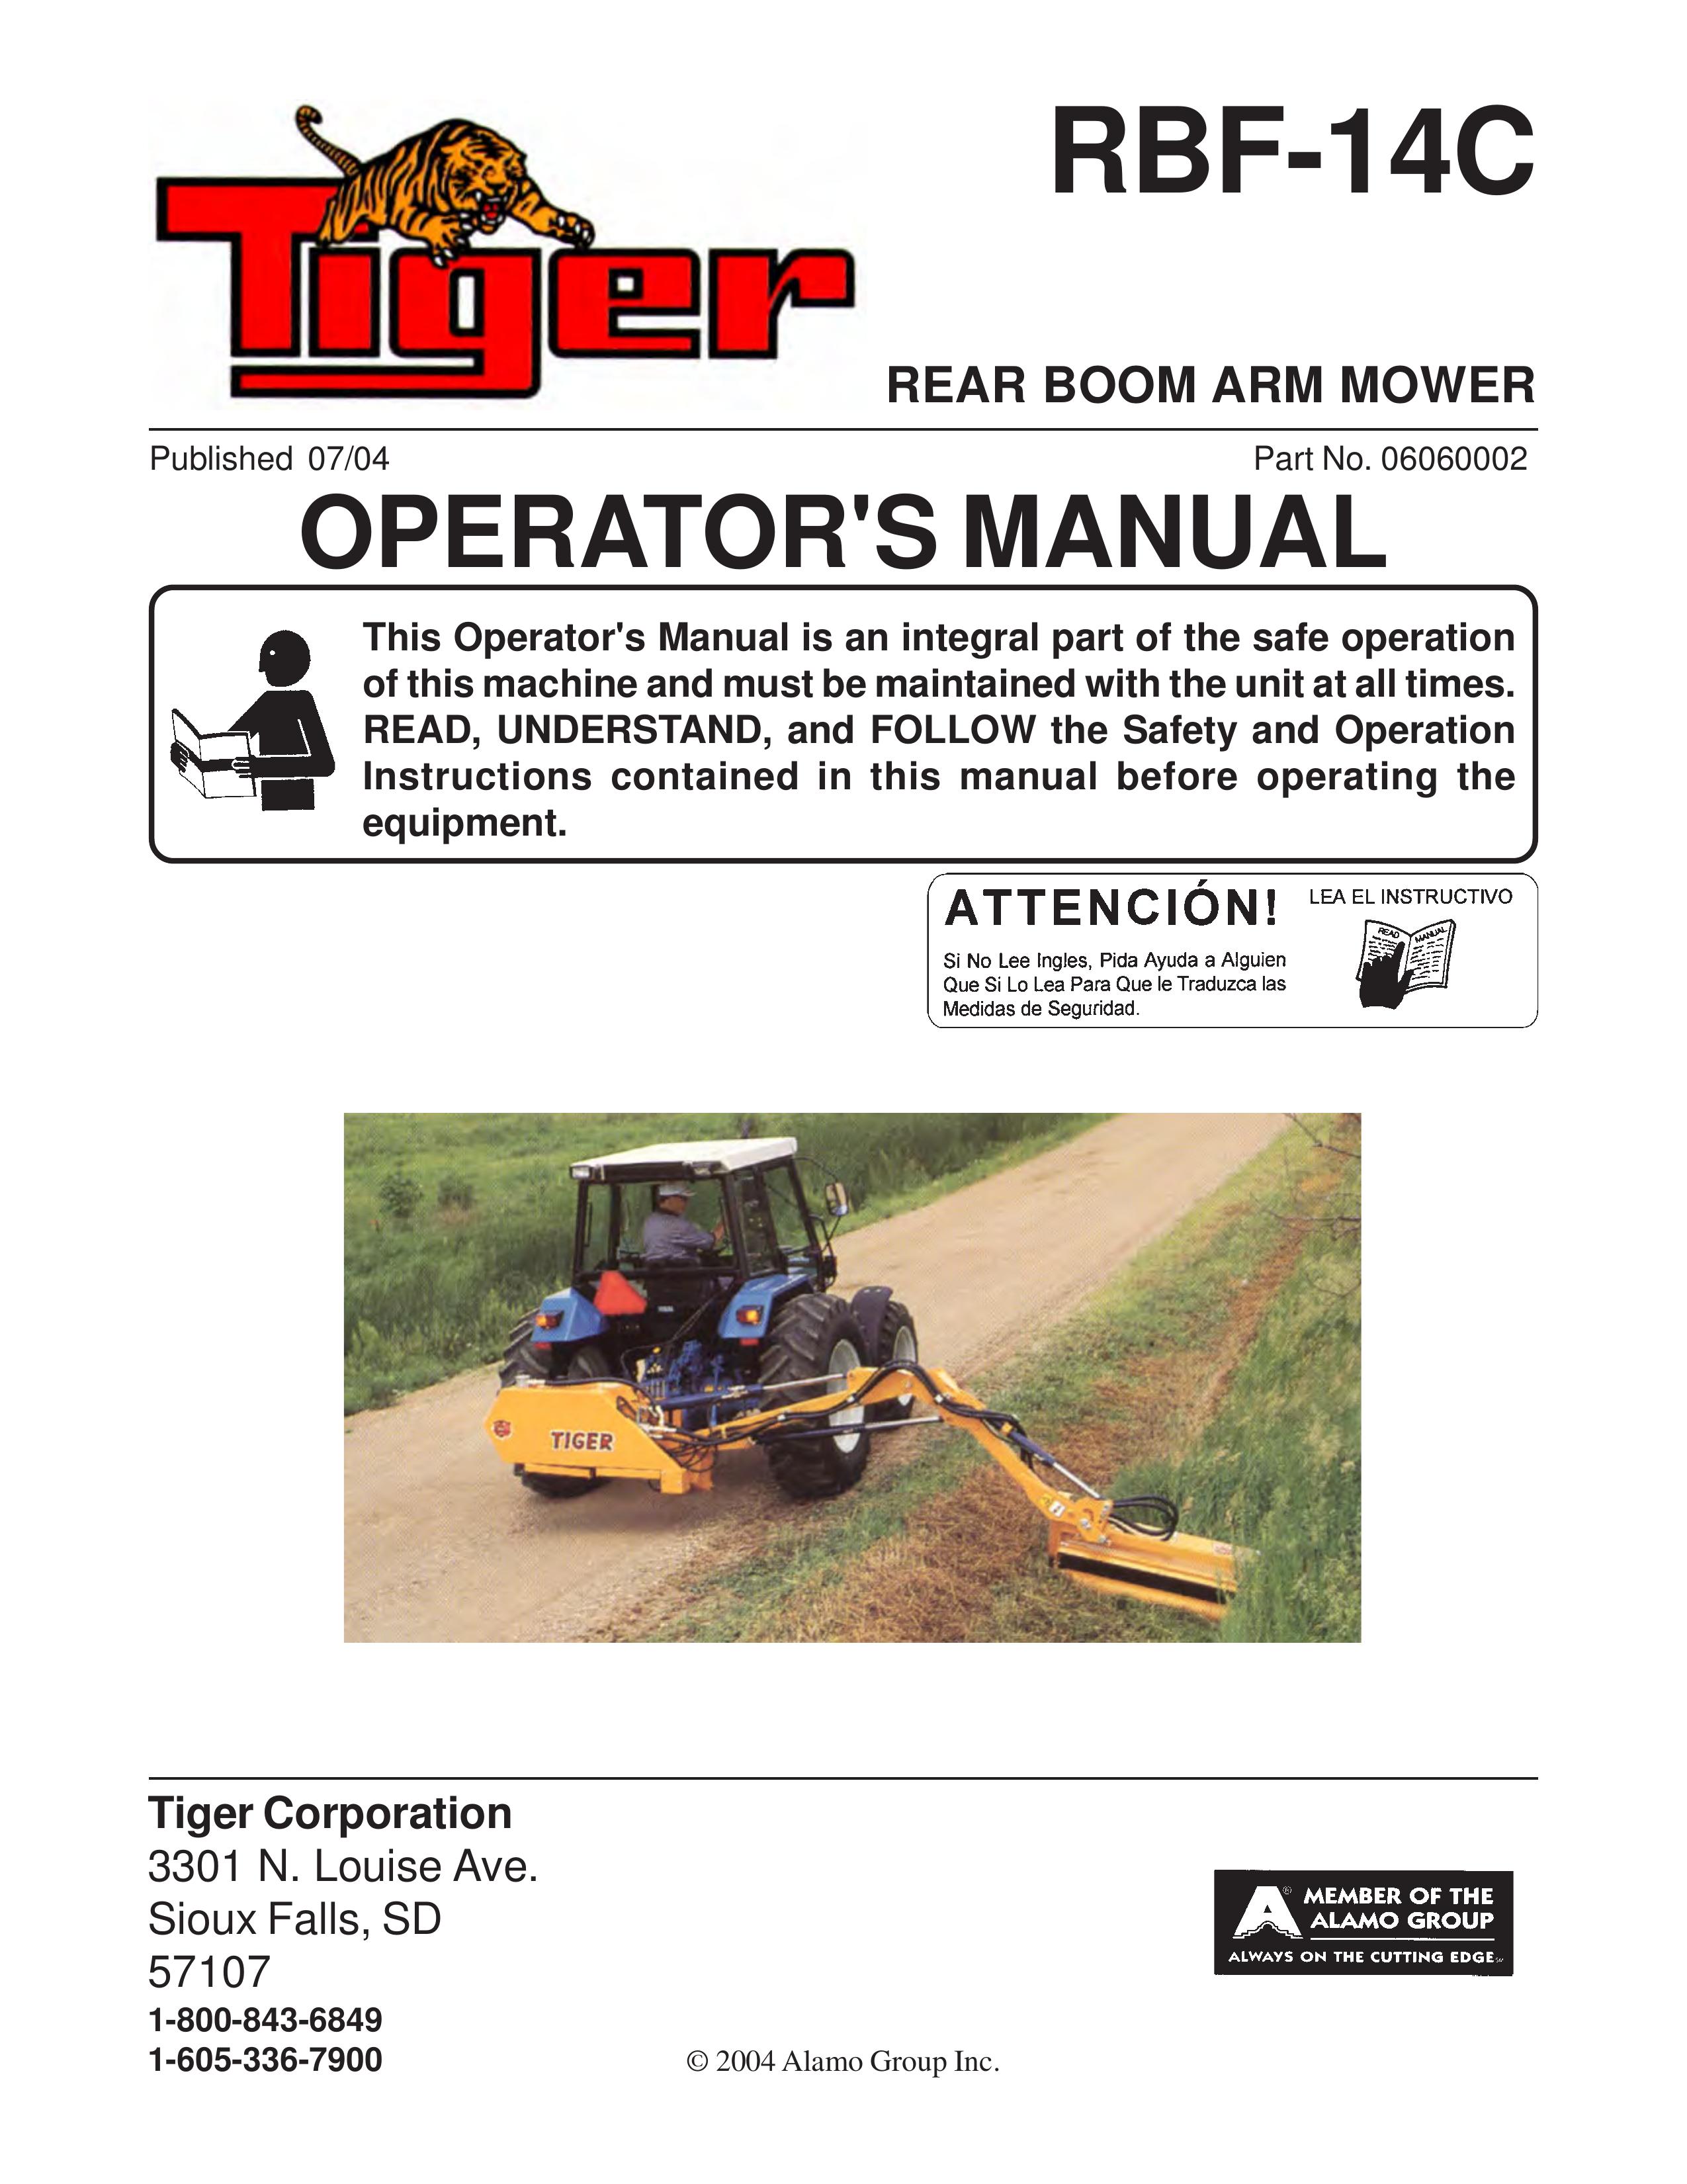 Tiger RBF-14C Lawn Mower User Manual